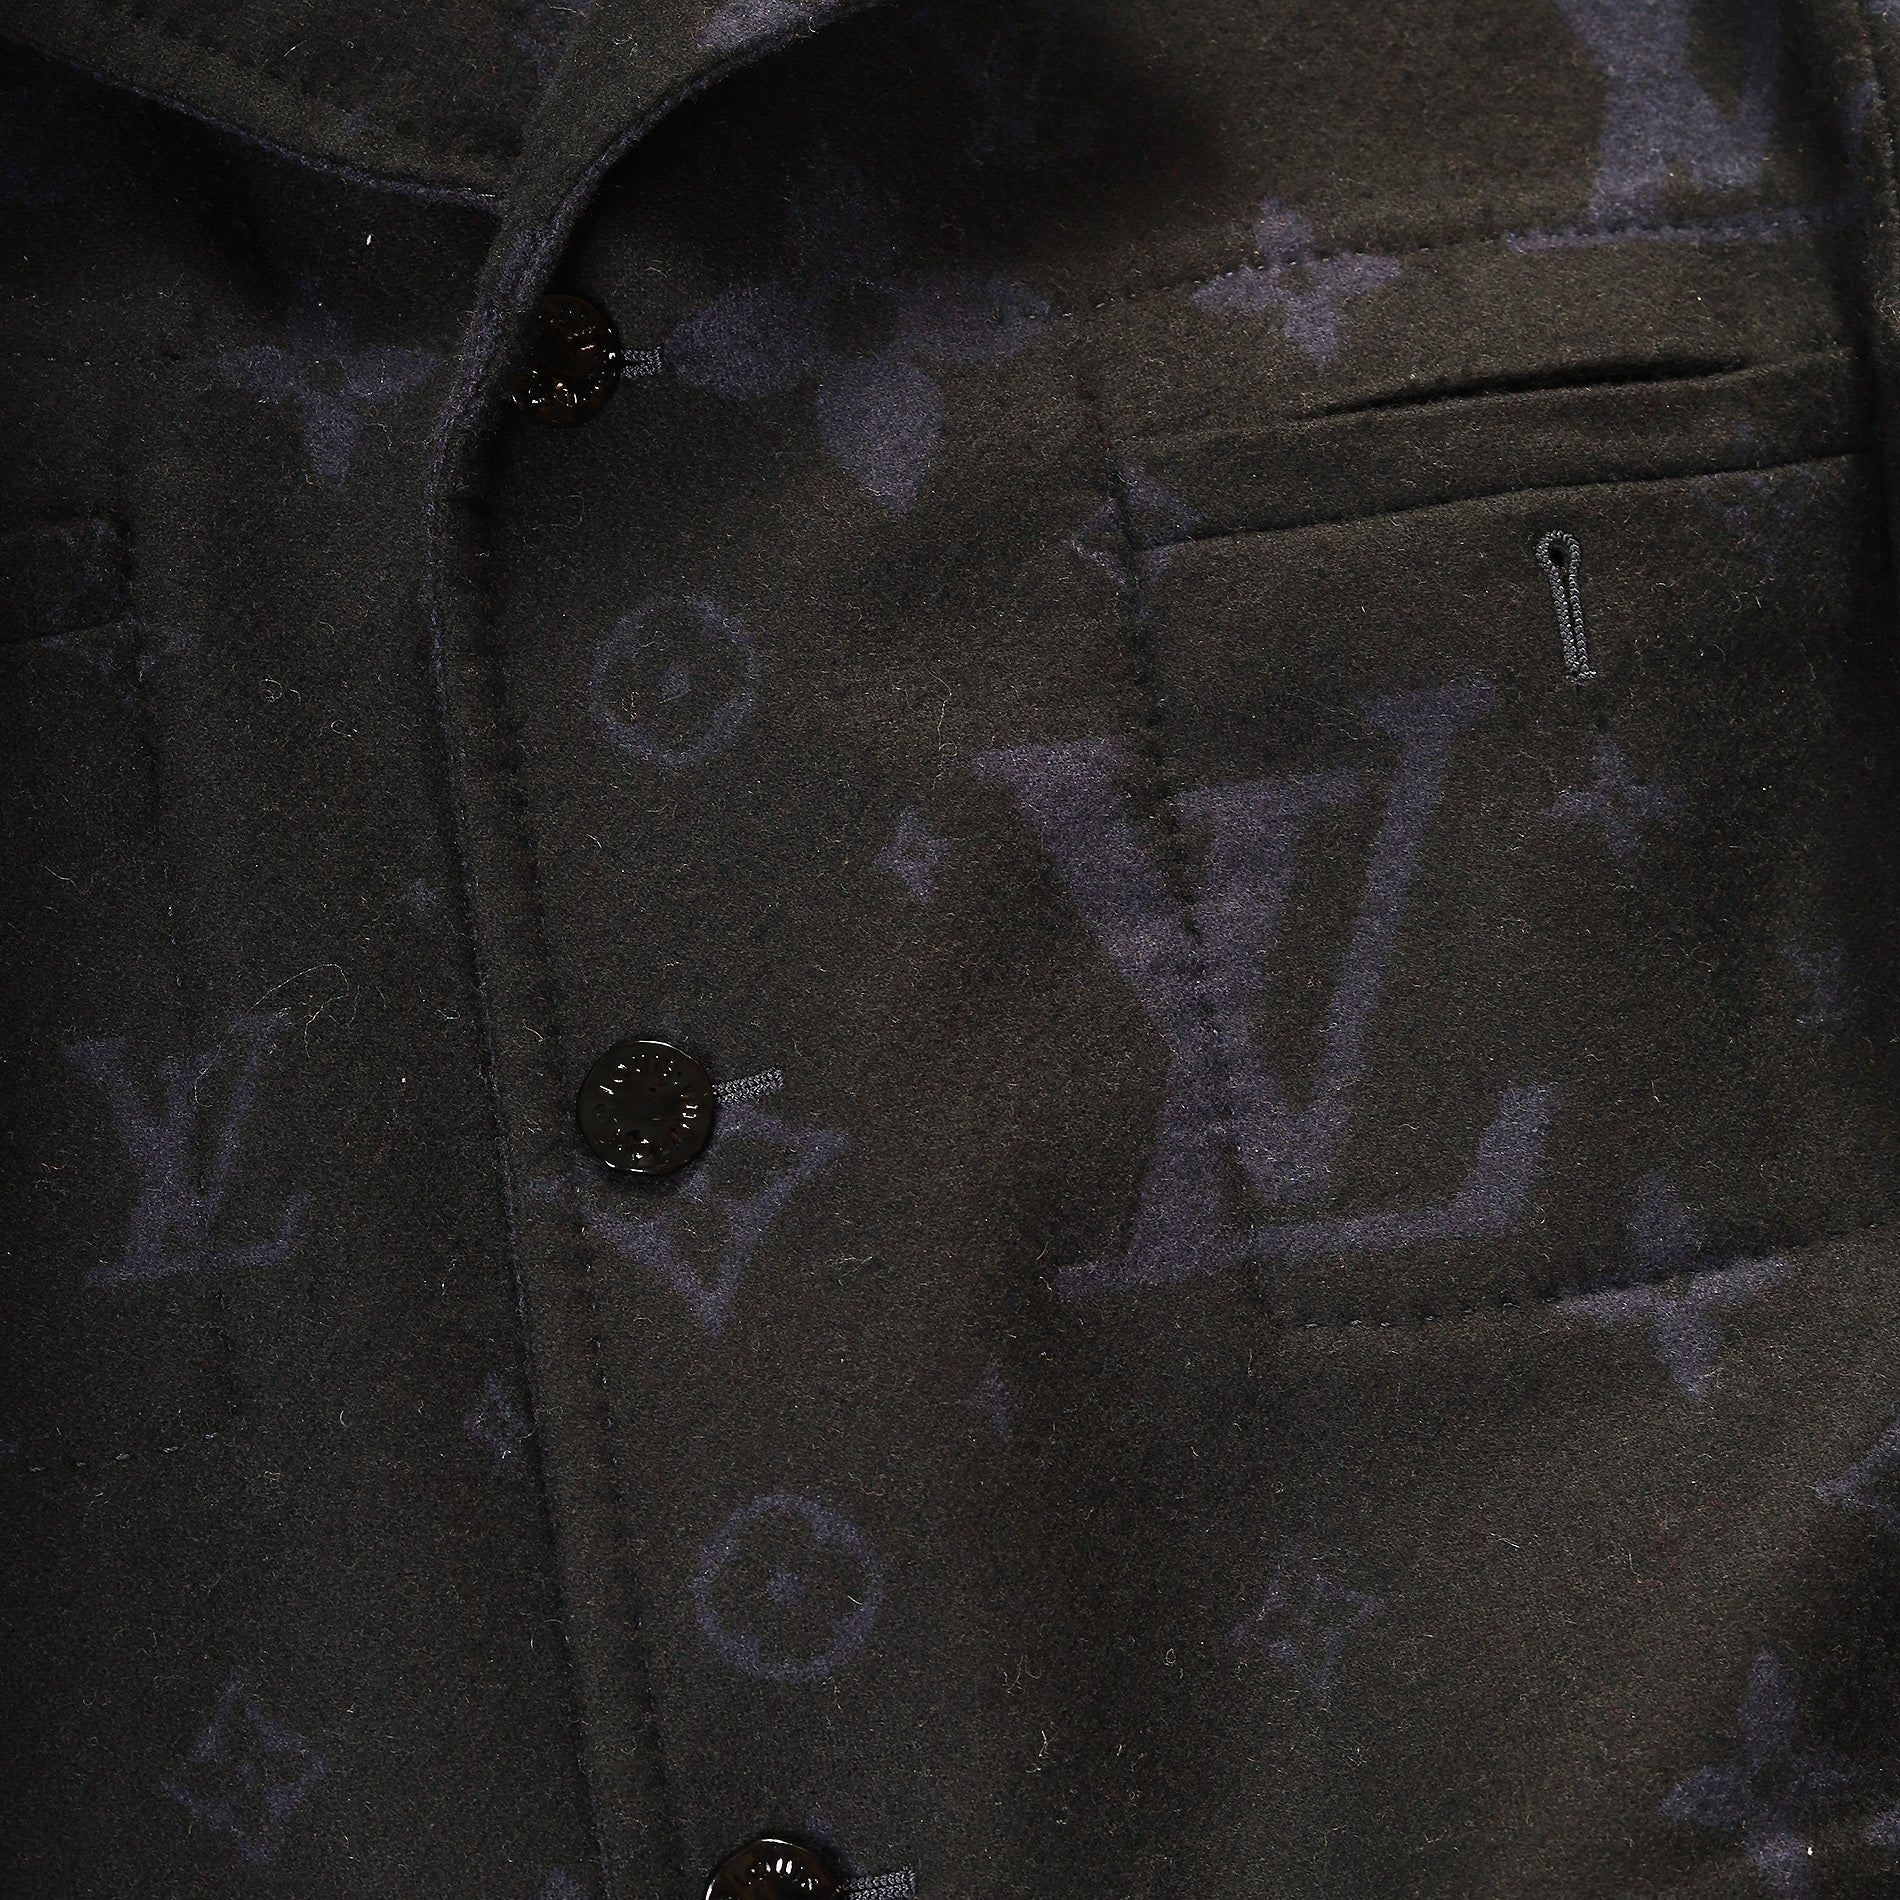 Louis Vuitton FW19 1 of 1 Monogram Reversible Wool Field Jacket Sample